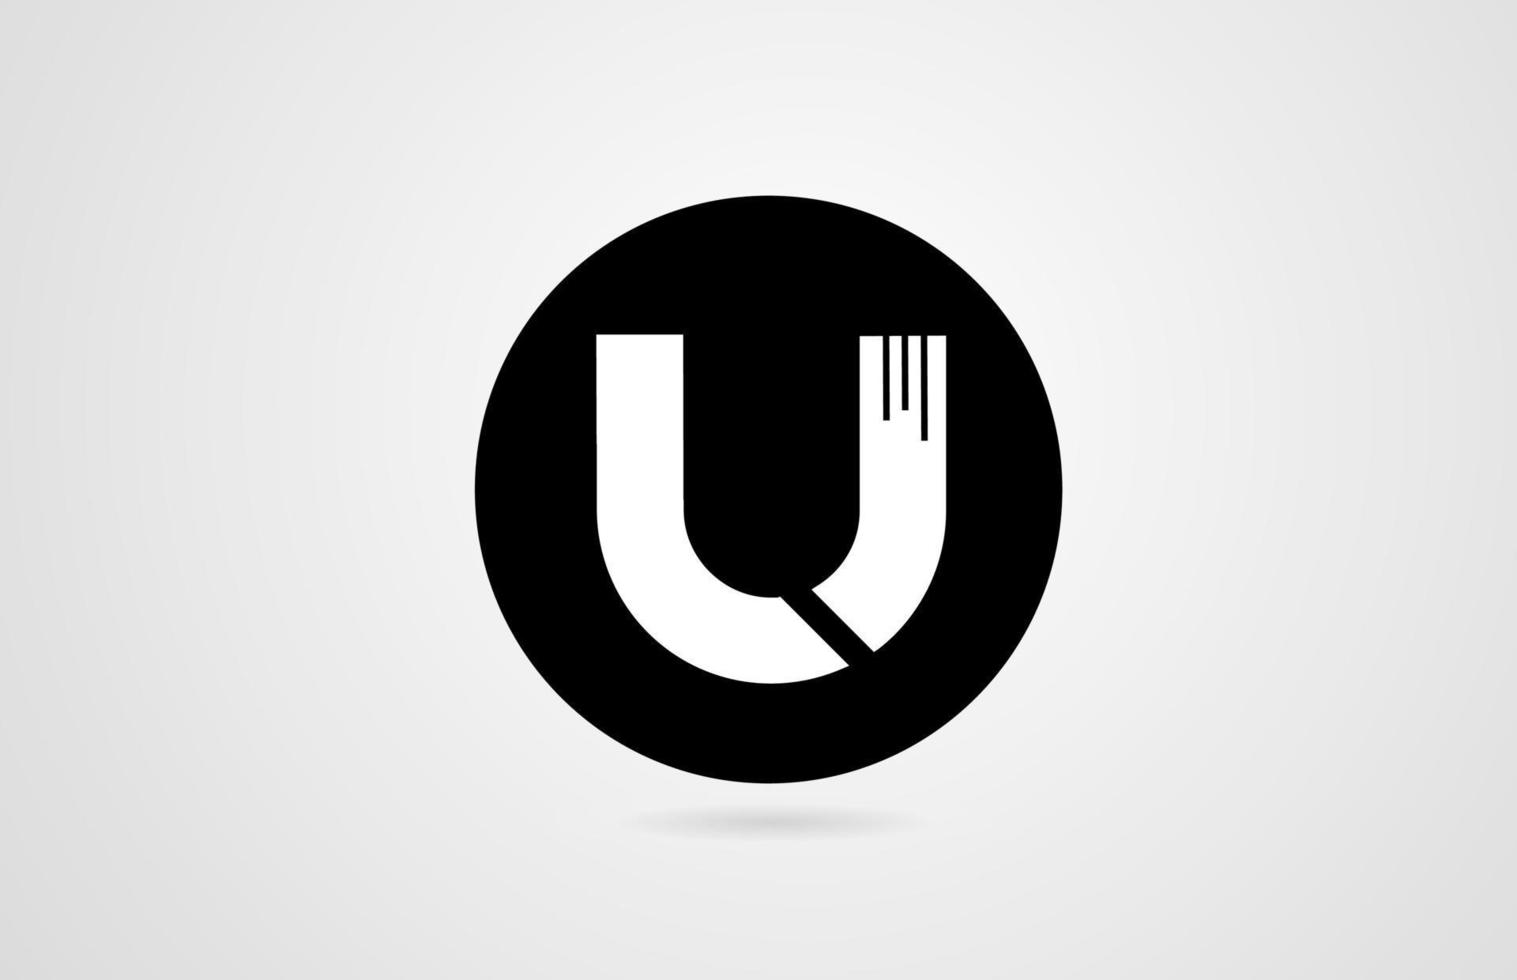 U white alphabet letter black circle company business logo icon design corporate vector